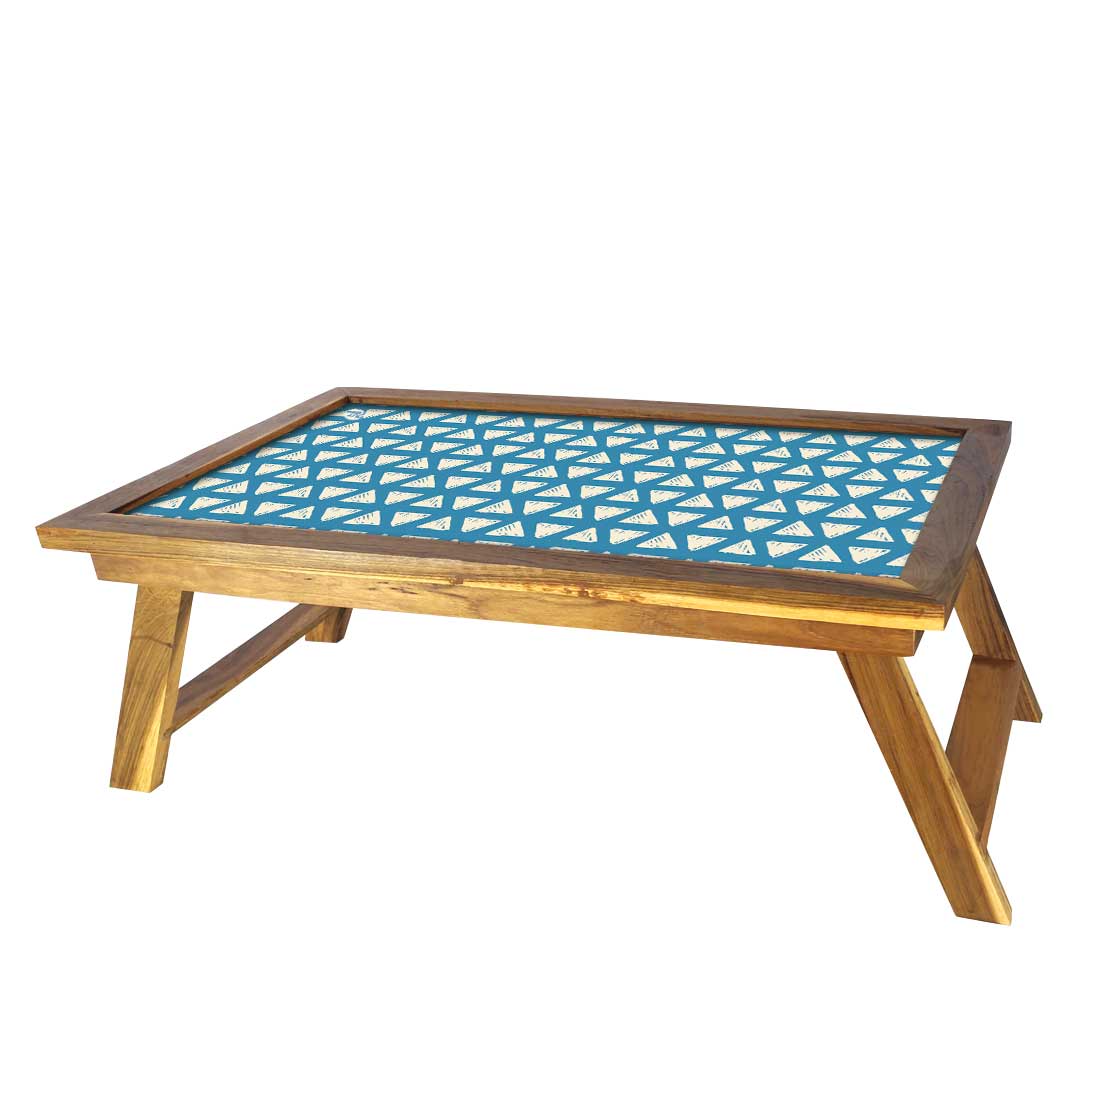 Nutcase Folding Laptop Table For Home Bed Lapdesk Breakfast Table Foldable Teak Wooden Study Desk - Blue Maze Nutcase